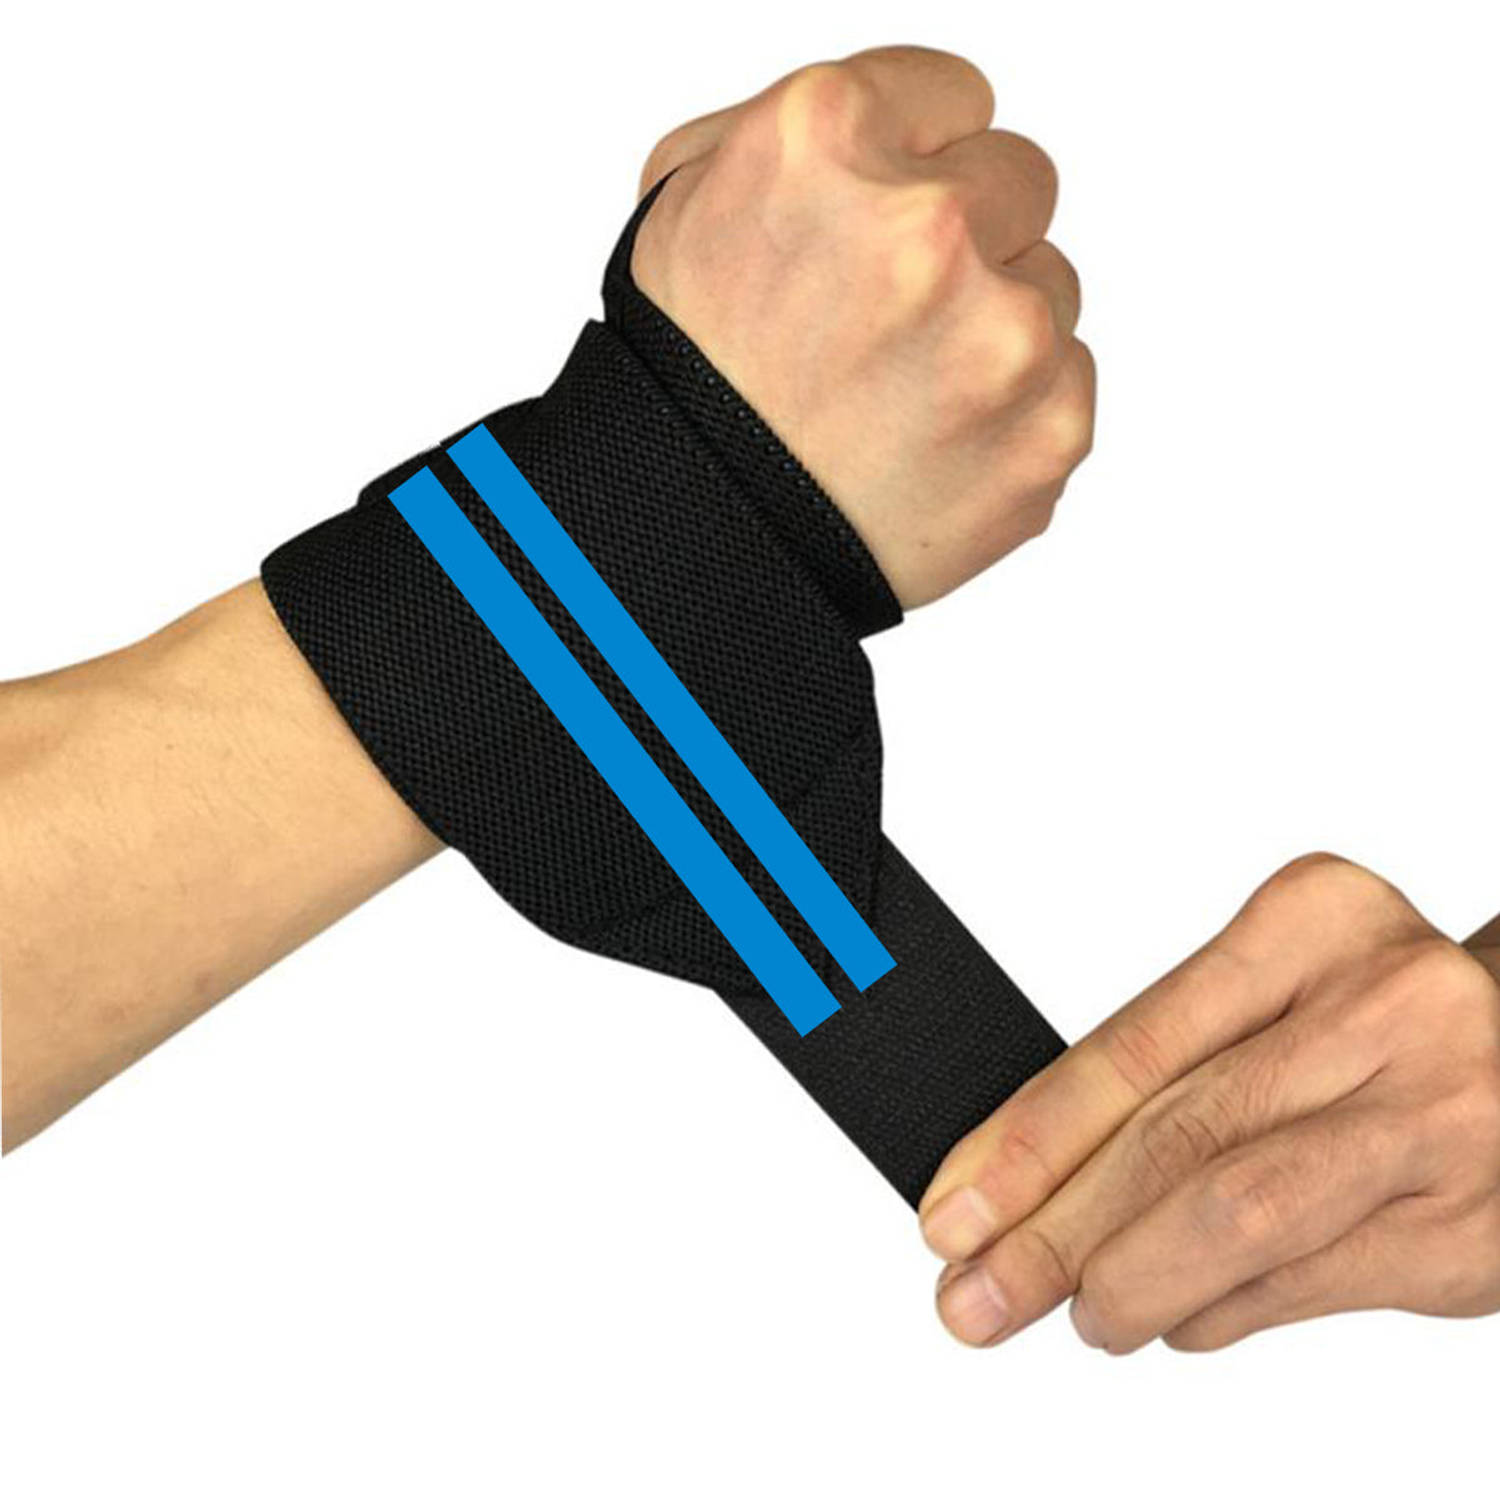 Fitness / Crossfit Polsband - 2 stuks - Lichtblauw / Zwart - Polsbandage Wrist Support Wraps - Pols Bandage Band - Bodybuilding Support - Gewichthef Straps - Krachttraining Lifting